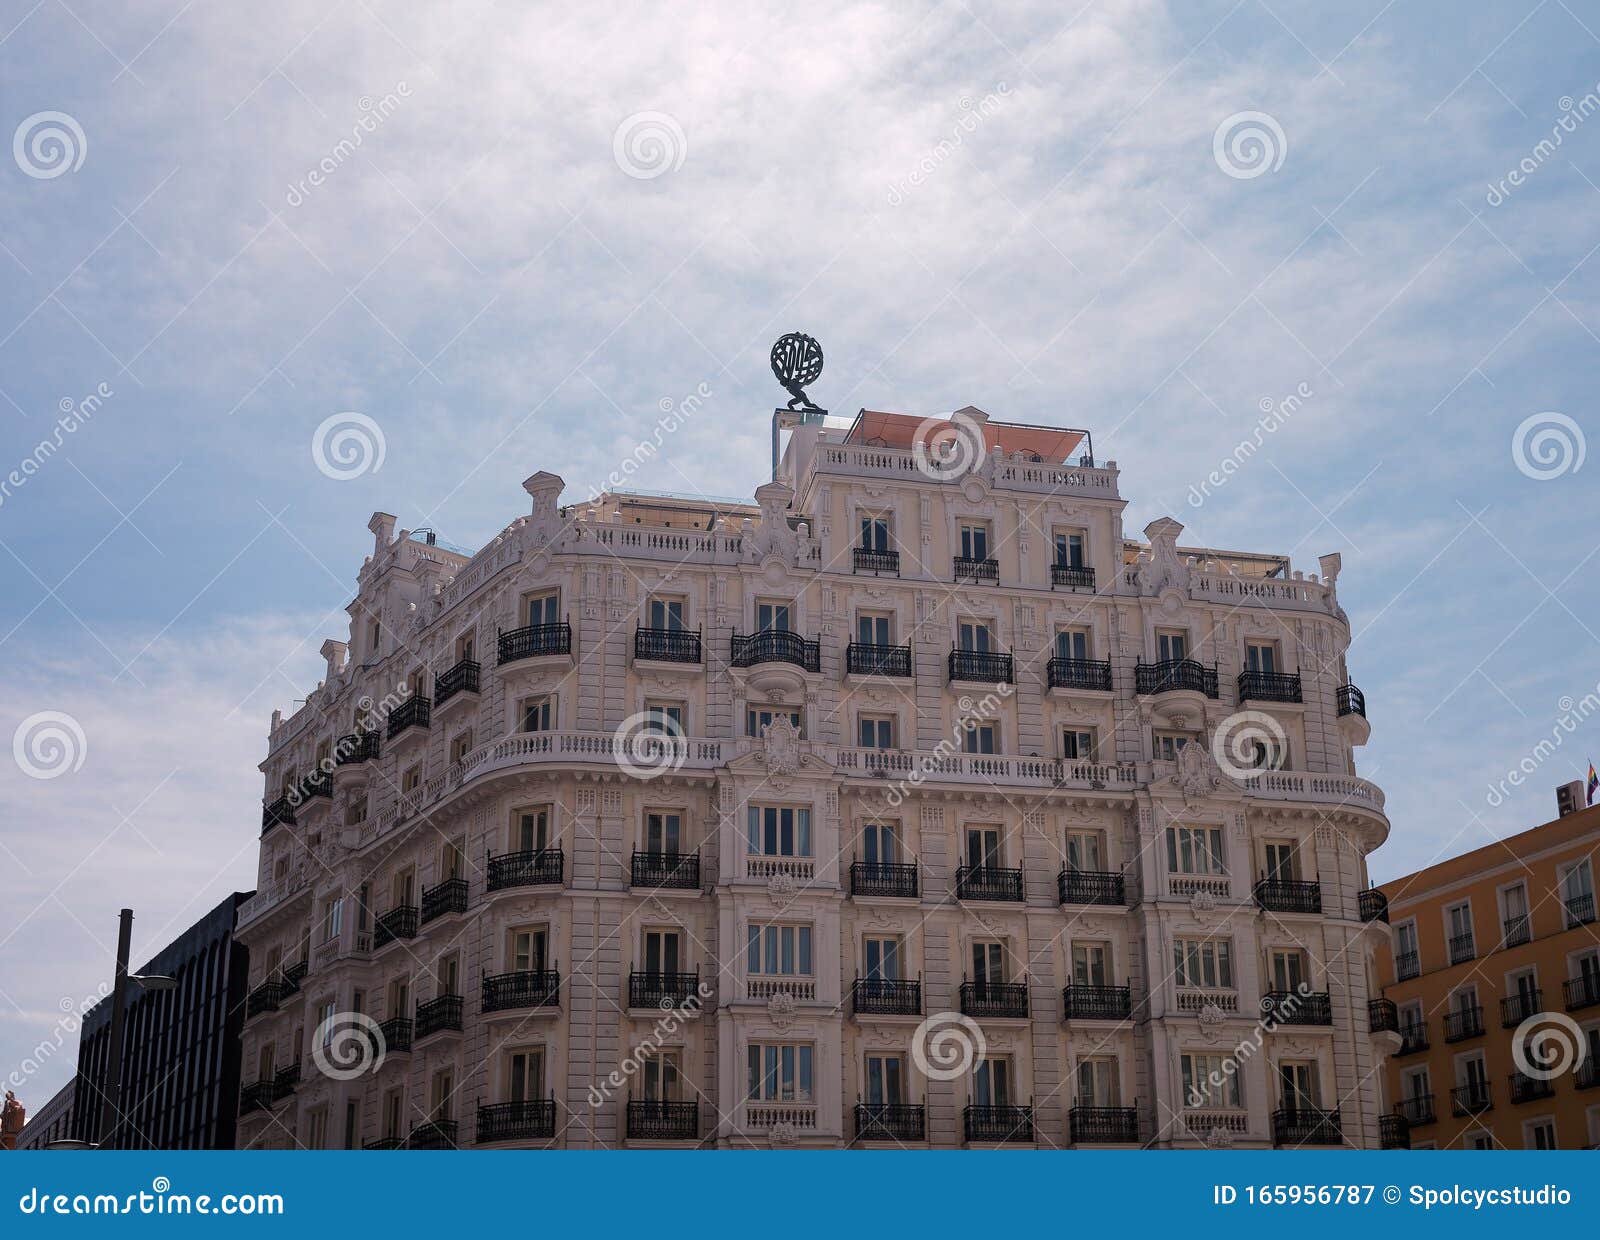 beautiful white building against blue sky at calle gran via, madrid, spain